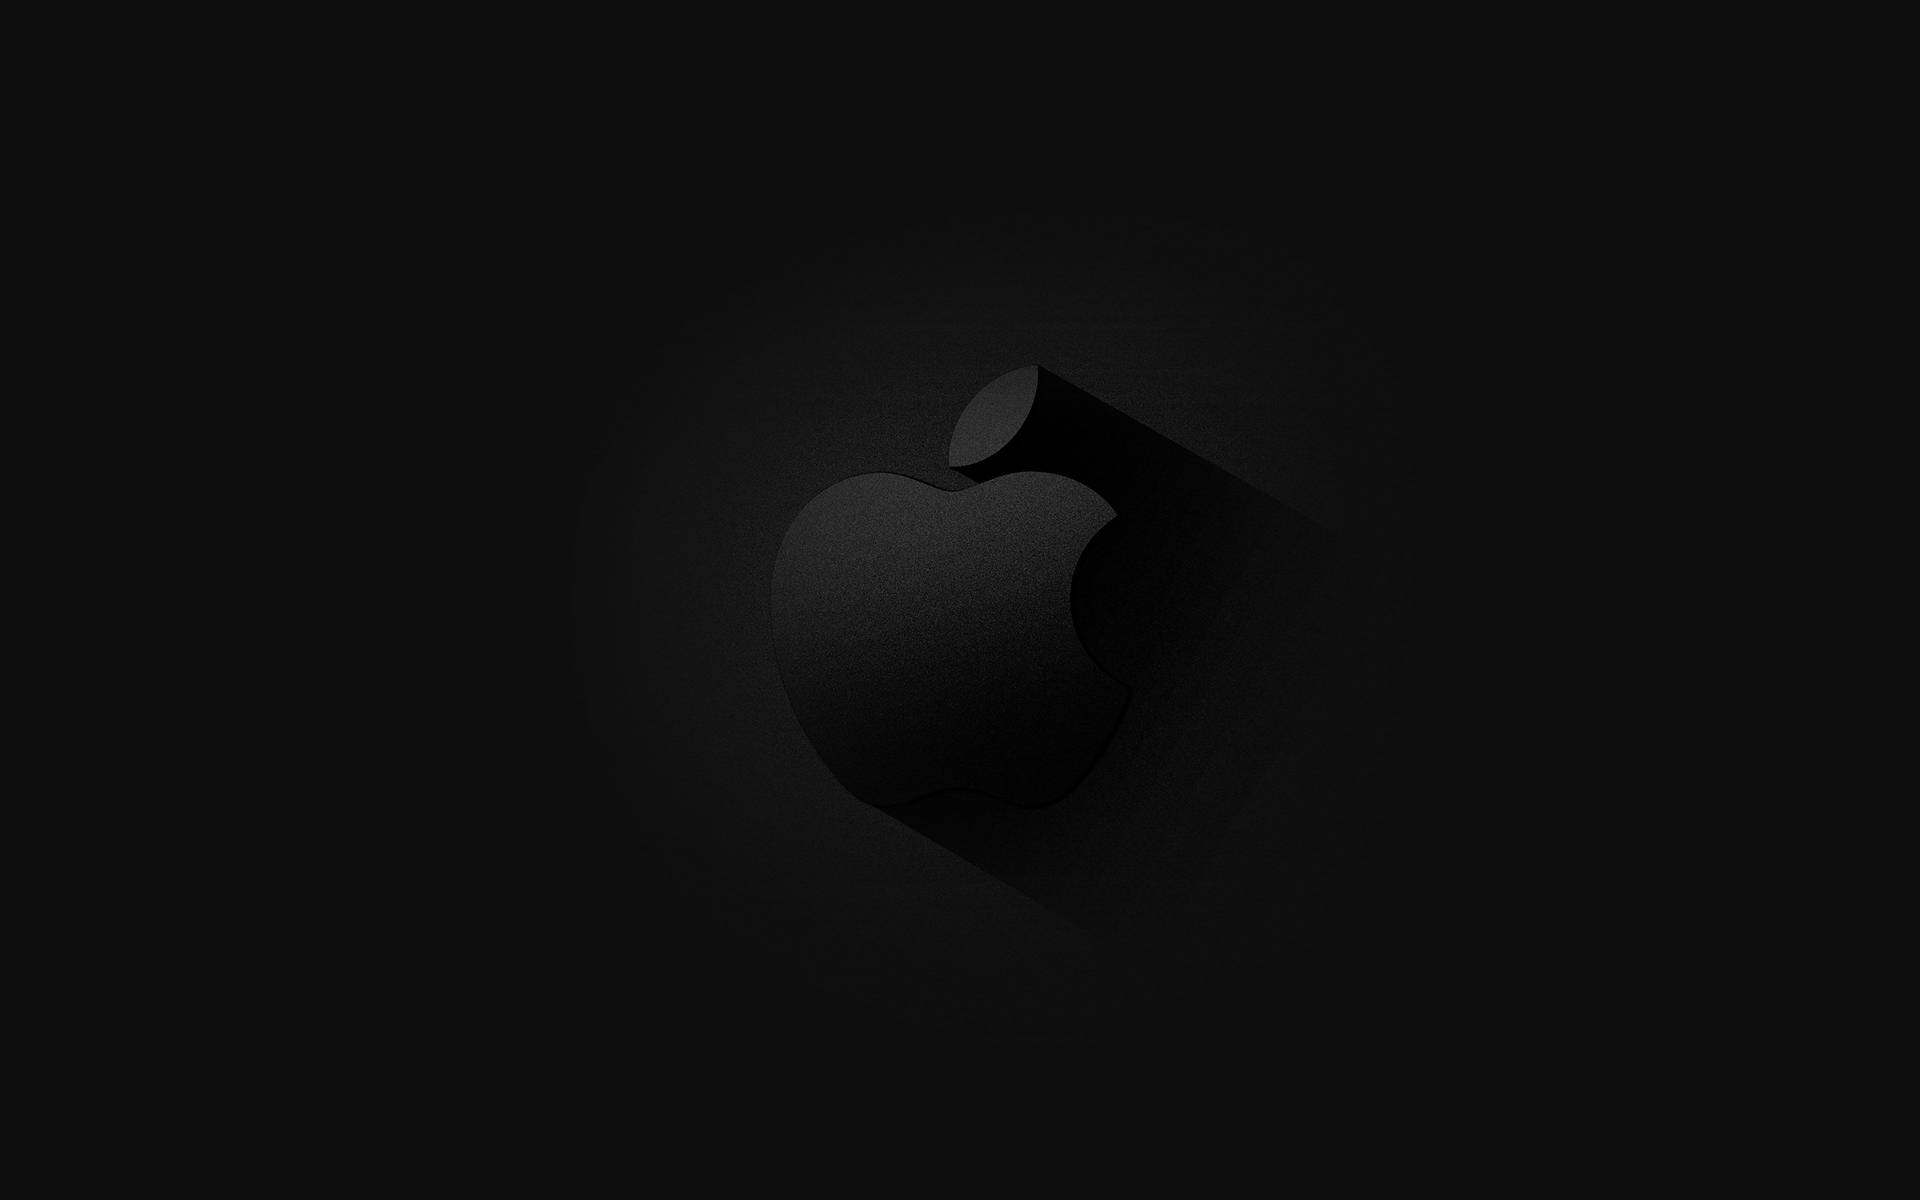 Black Mac Apple Logo Picture